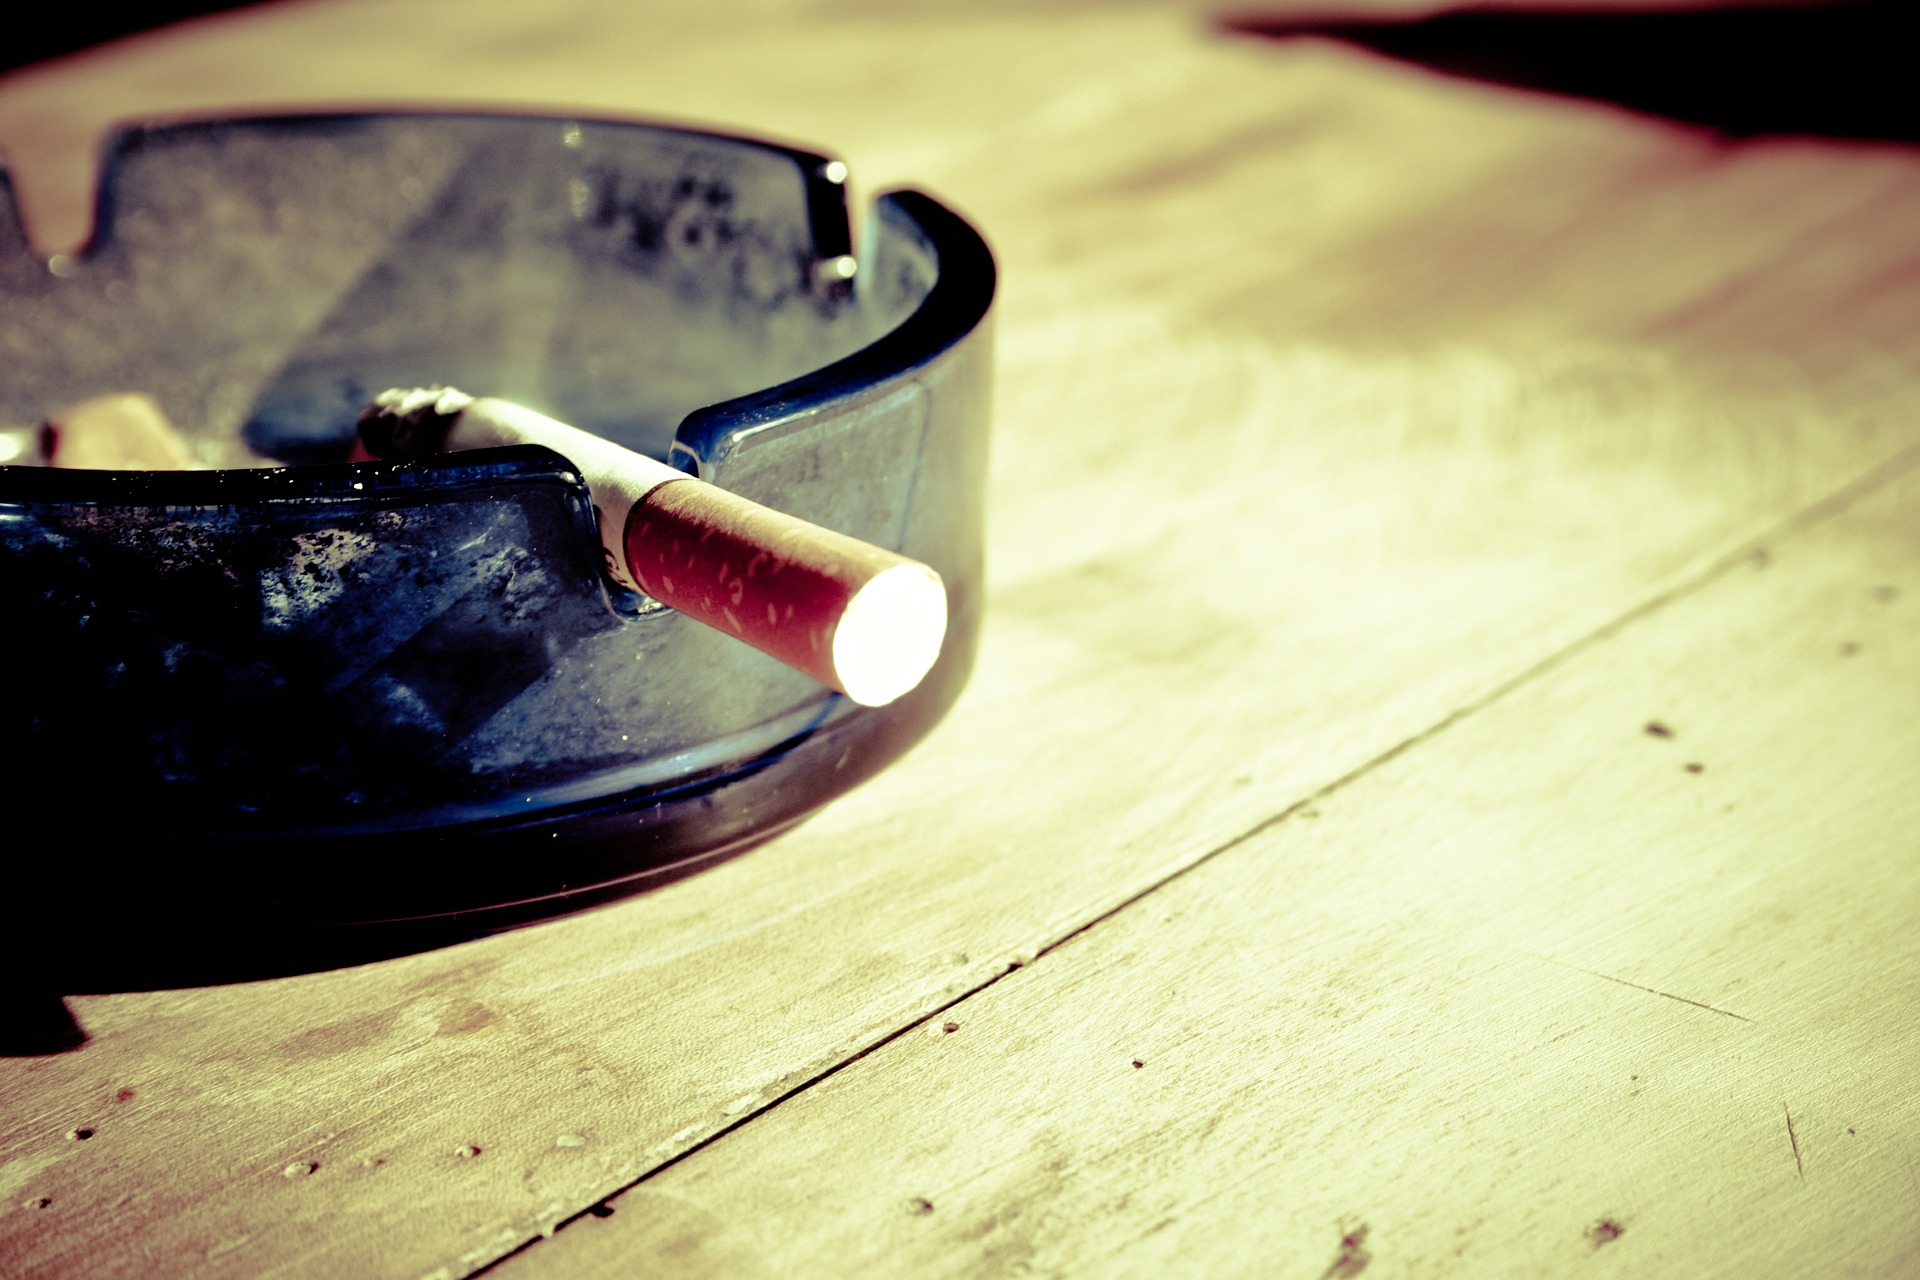 6 Ways to Kick Your Cigarette Addiction